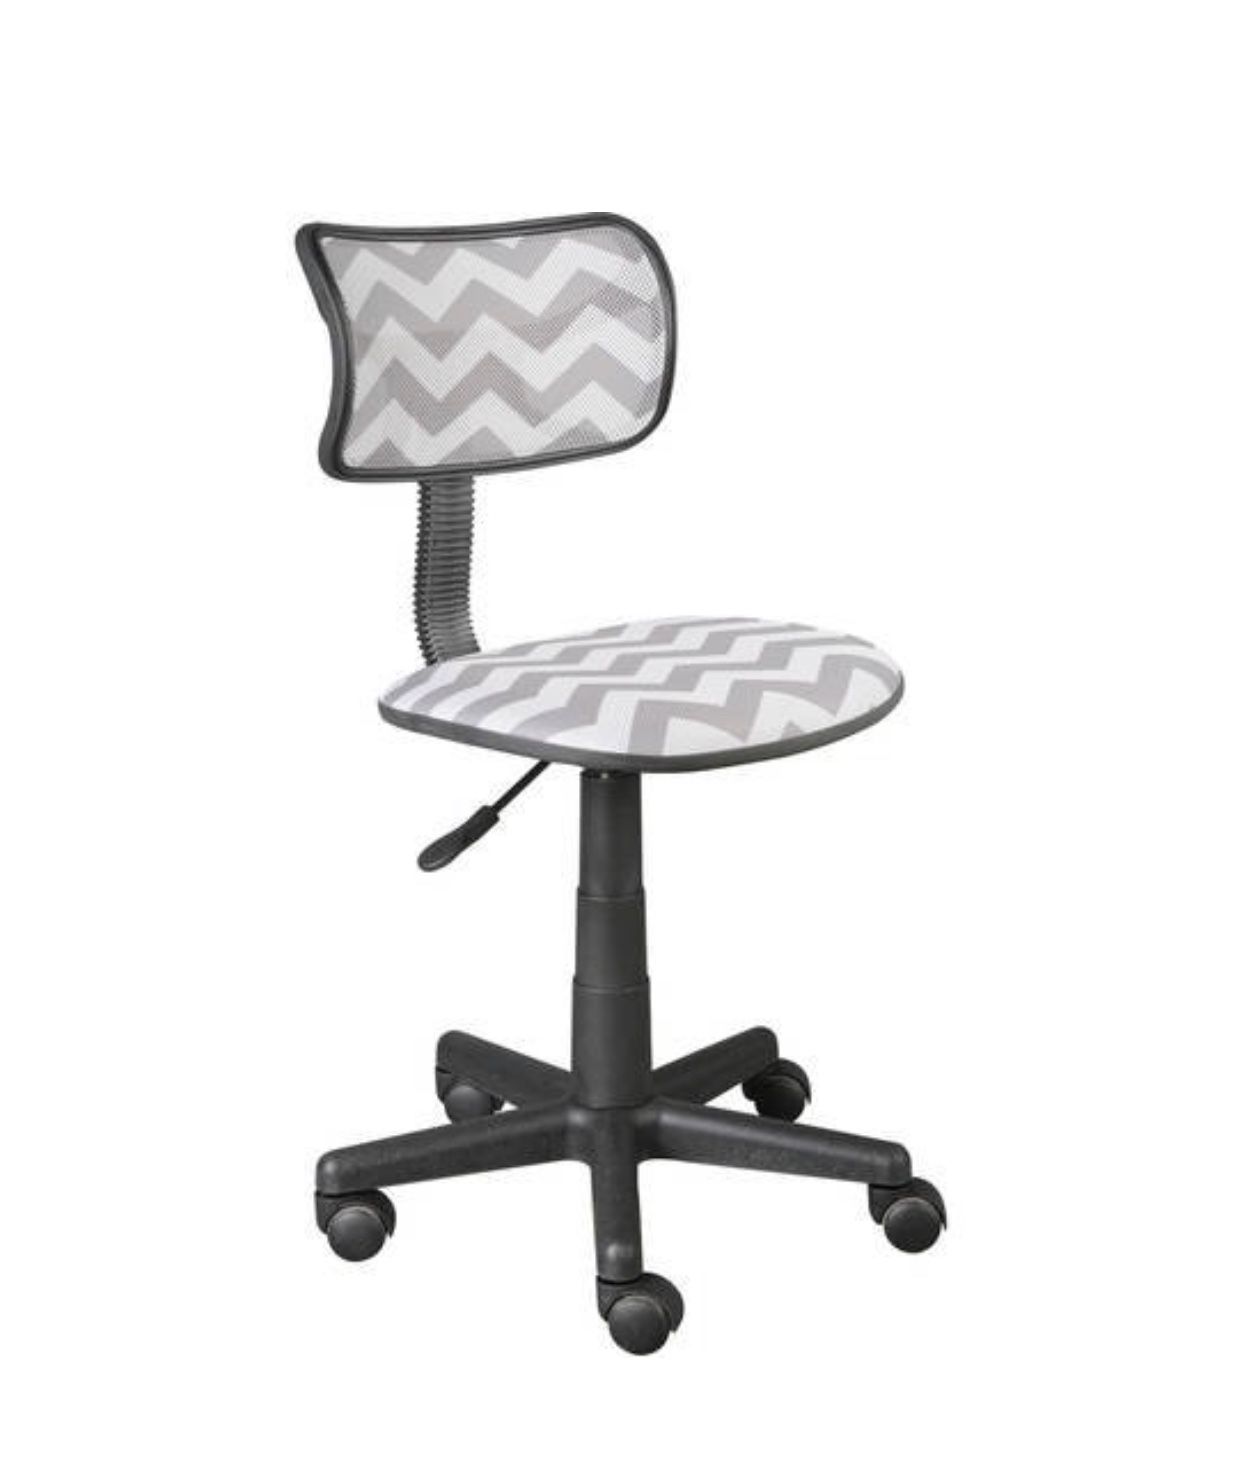 Urban Shop Swivel Mesh Office Chair, Gray chevron Color